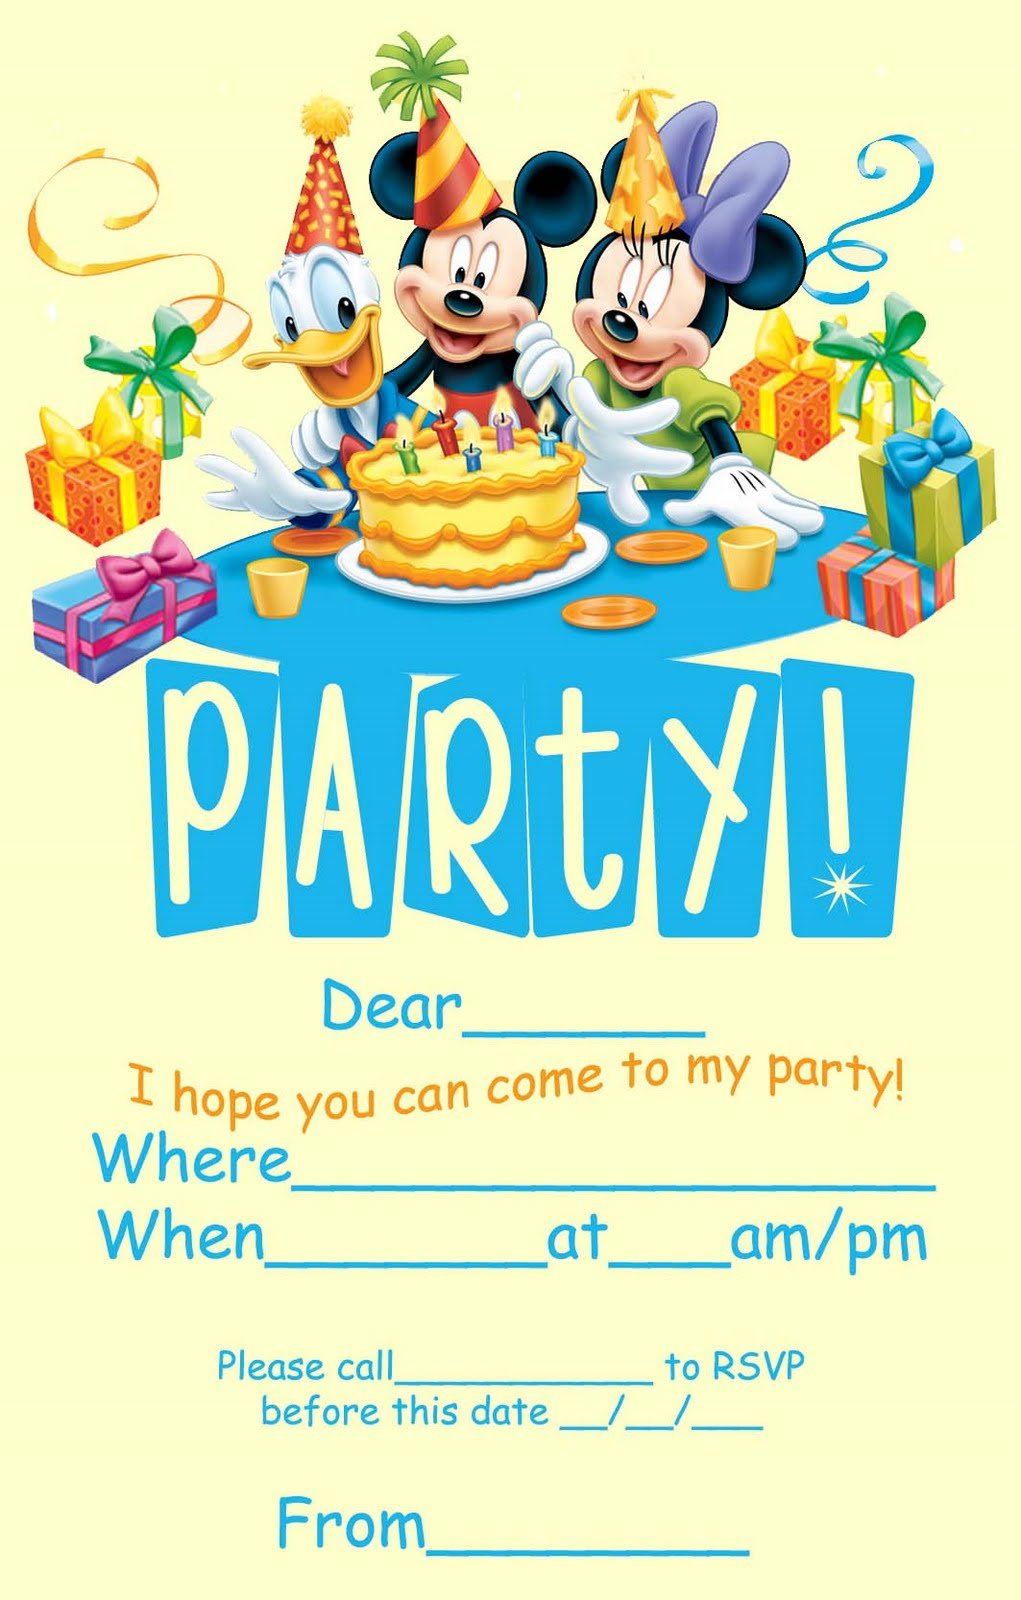 Disney Party Invitations Elegant Disney Party Invitations Hd Image